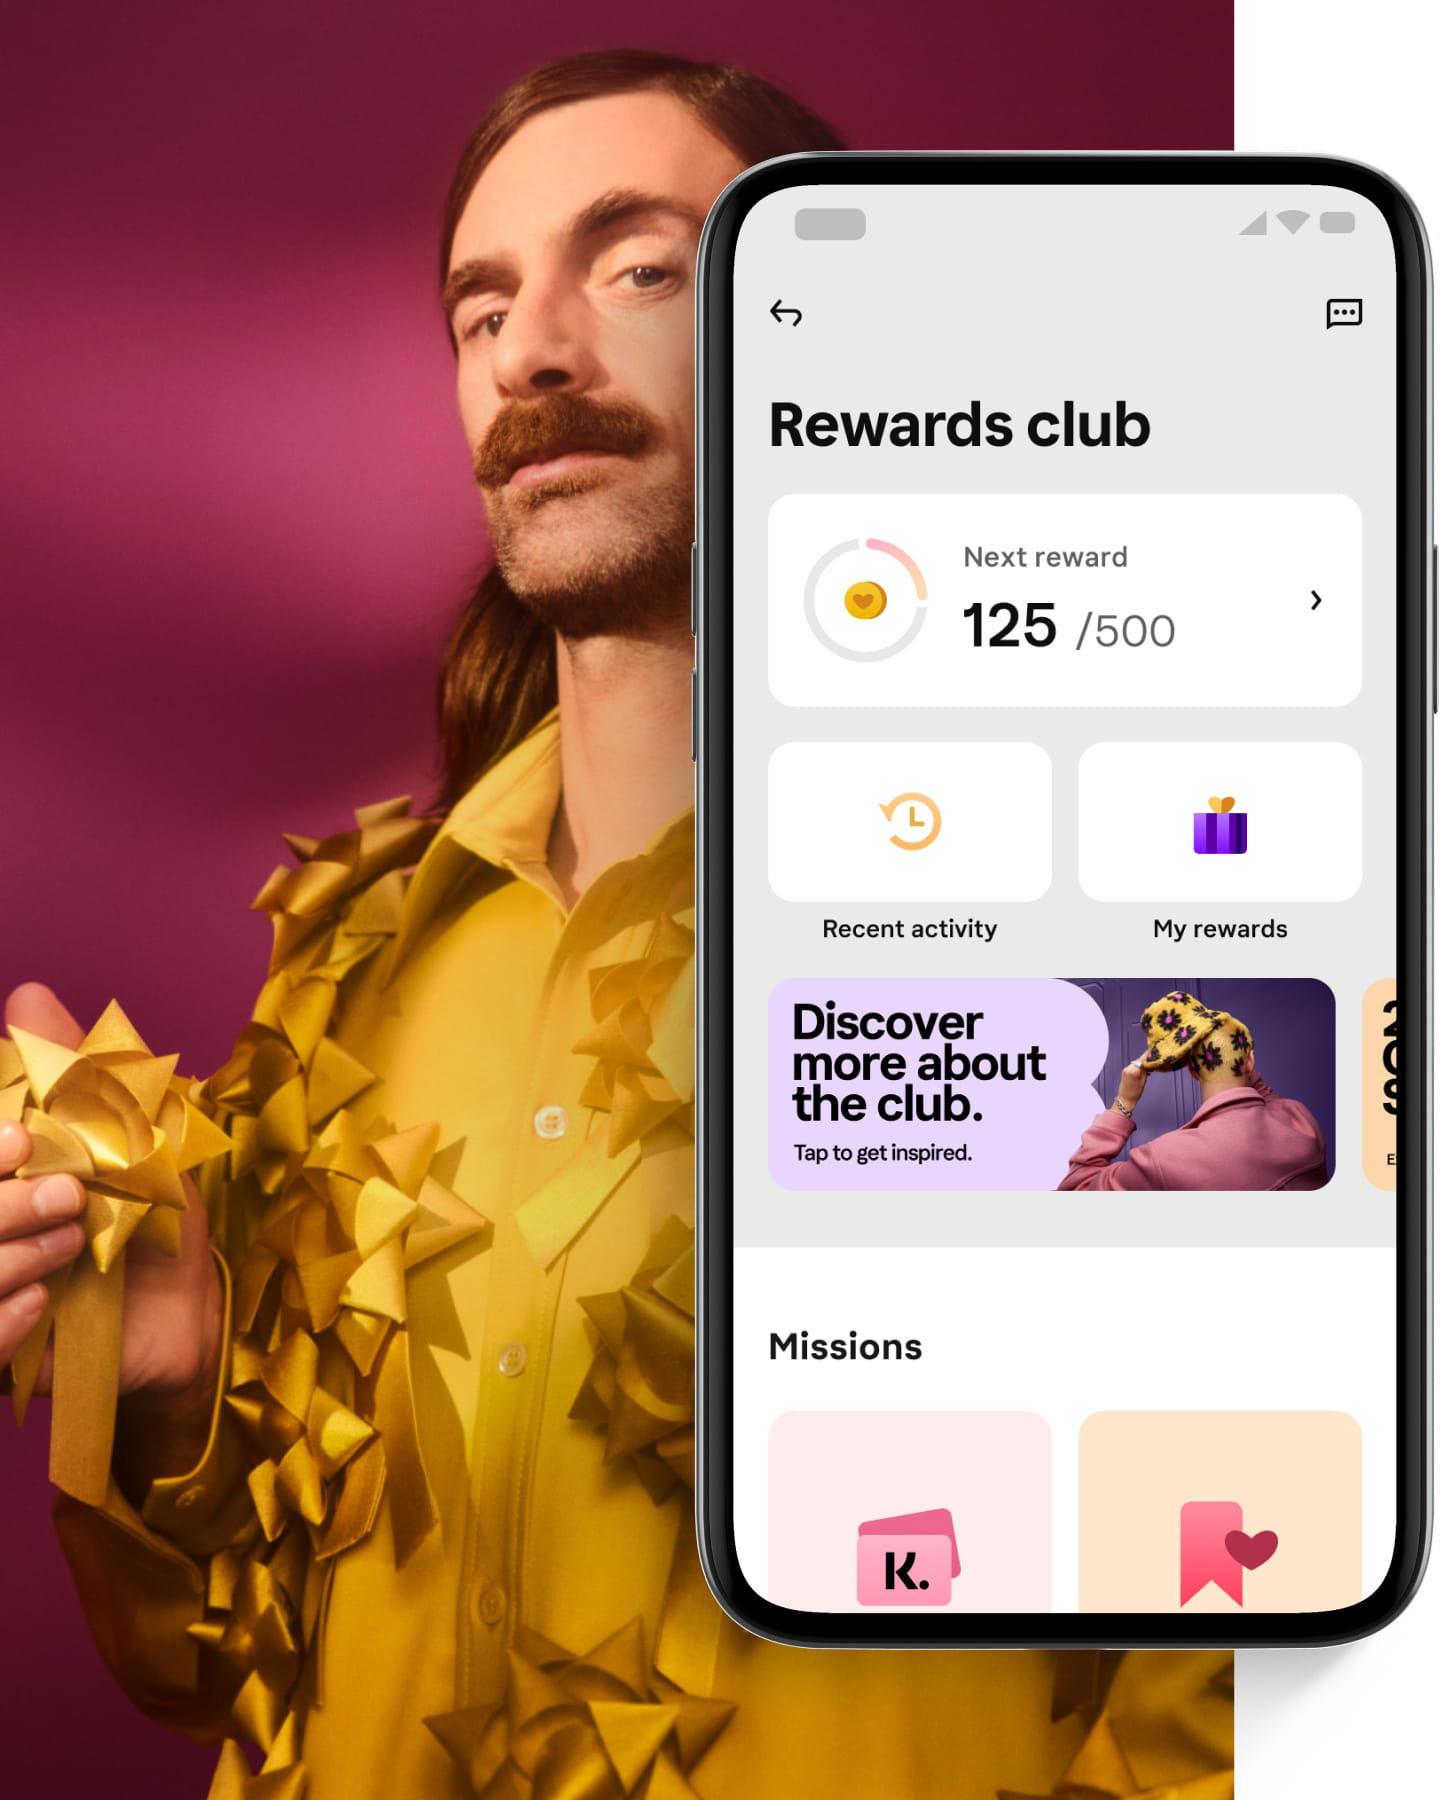 Rewards club block